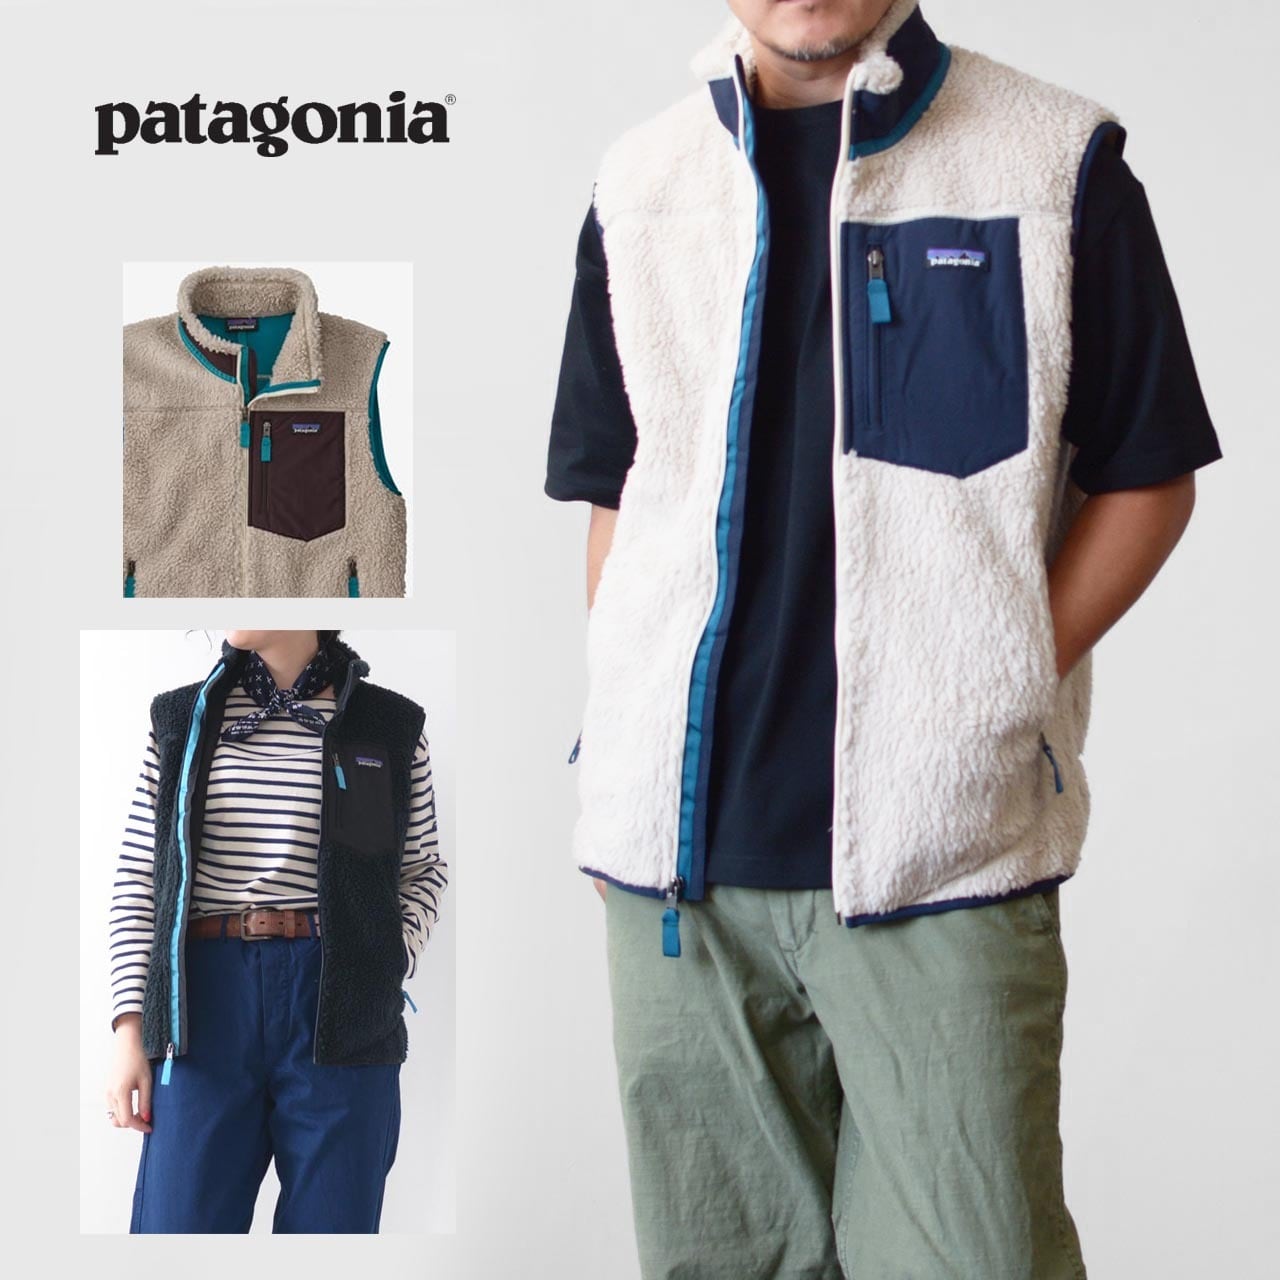 Patagonia [パタゴニア] M's Classic Retro-X Vest [23048-23] メンズ